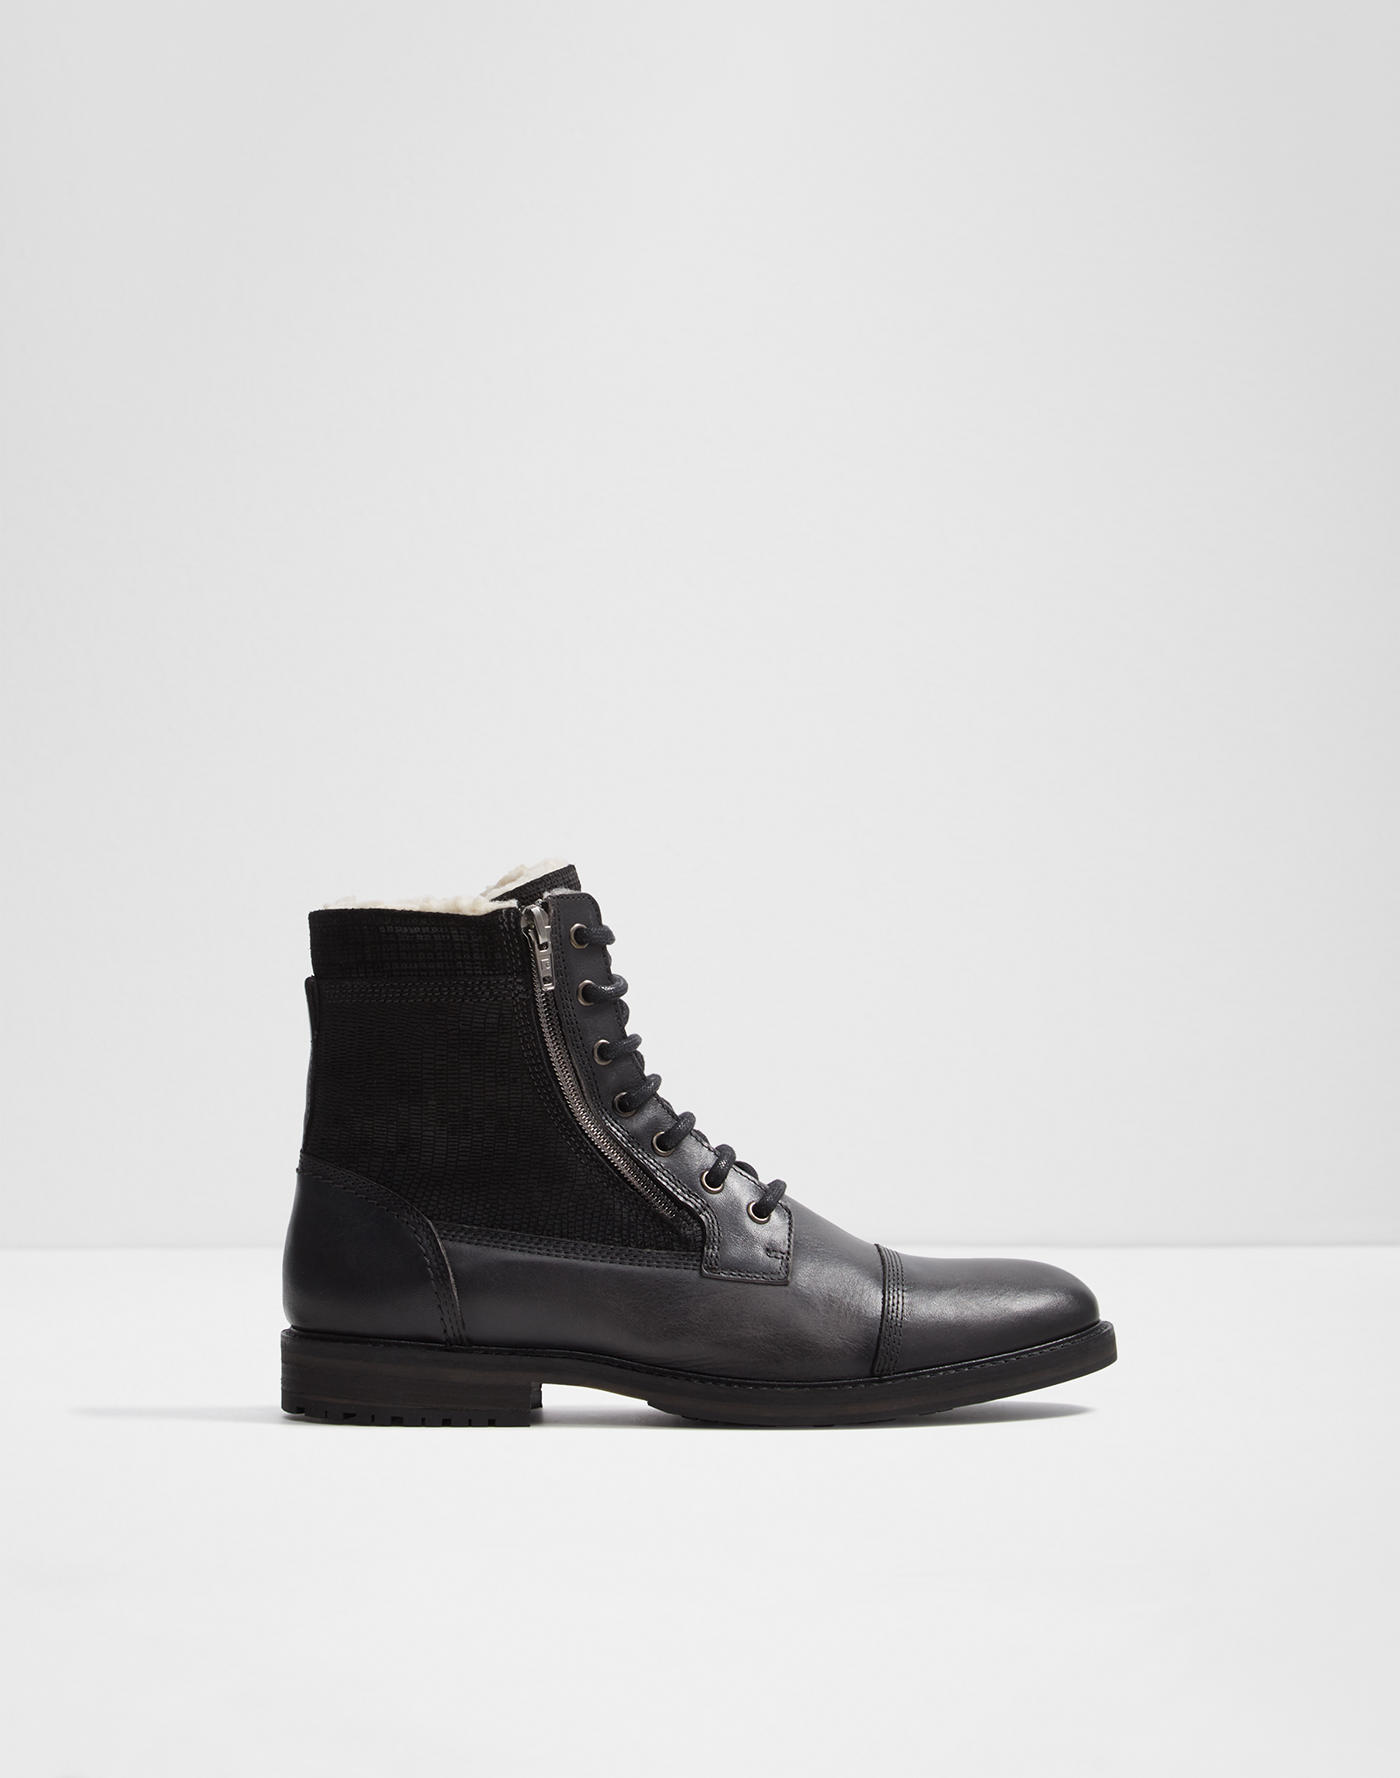 Boots for Men | ALDO Canada